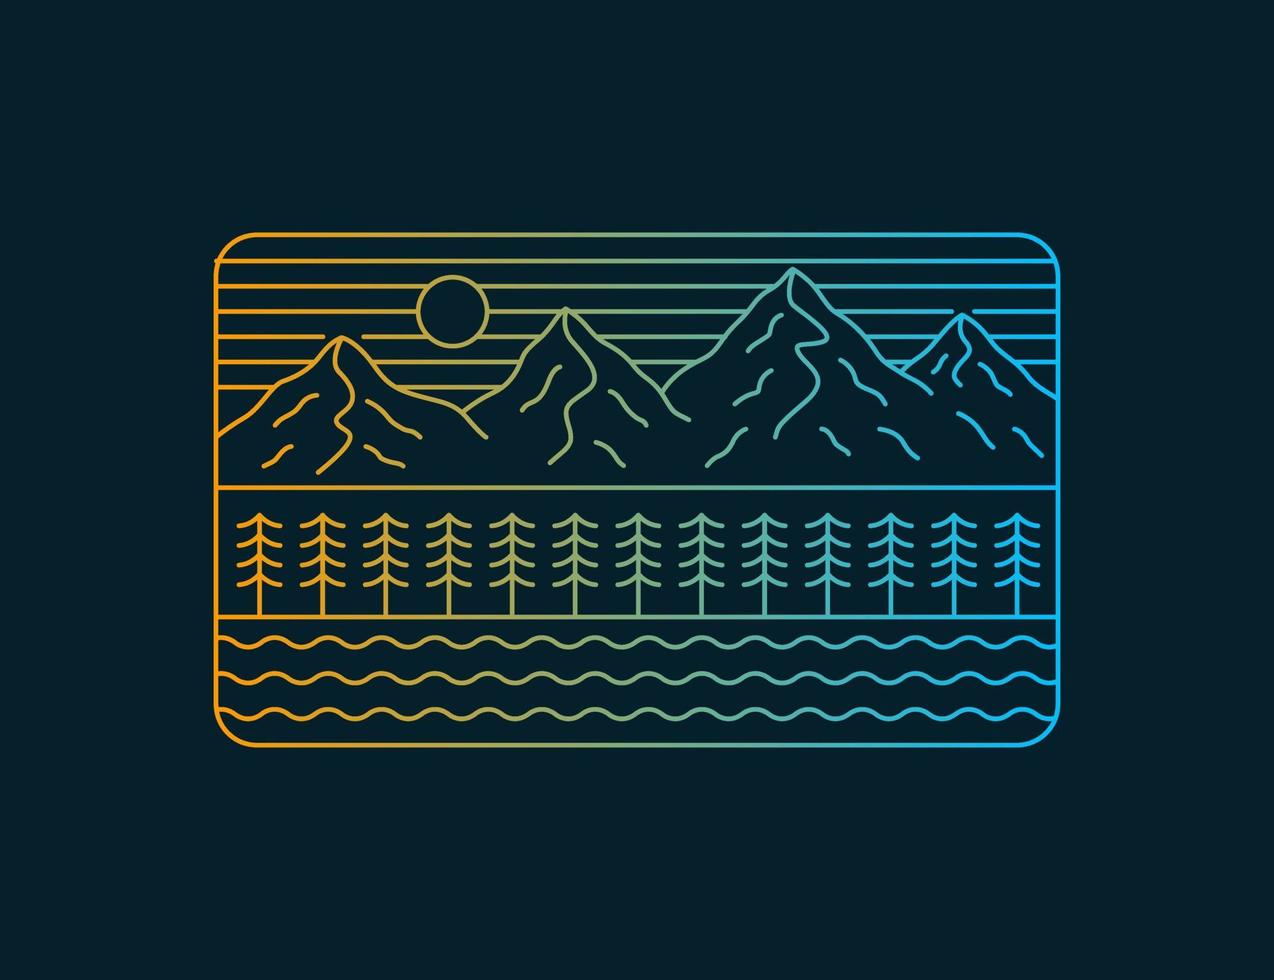 det klippiga berget vilda naturen i mono linje för badge patch emblem grafisk vektorkonst t-shirt design vektor